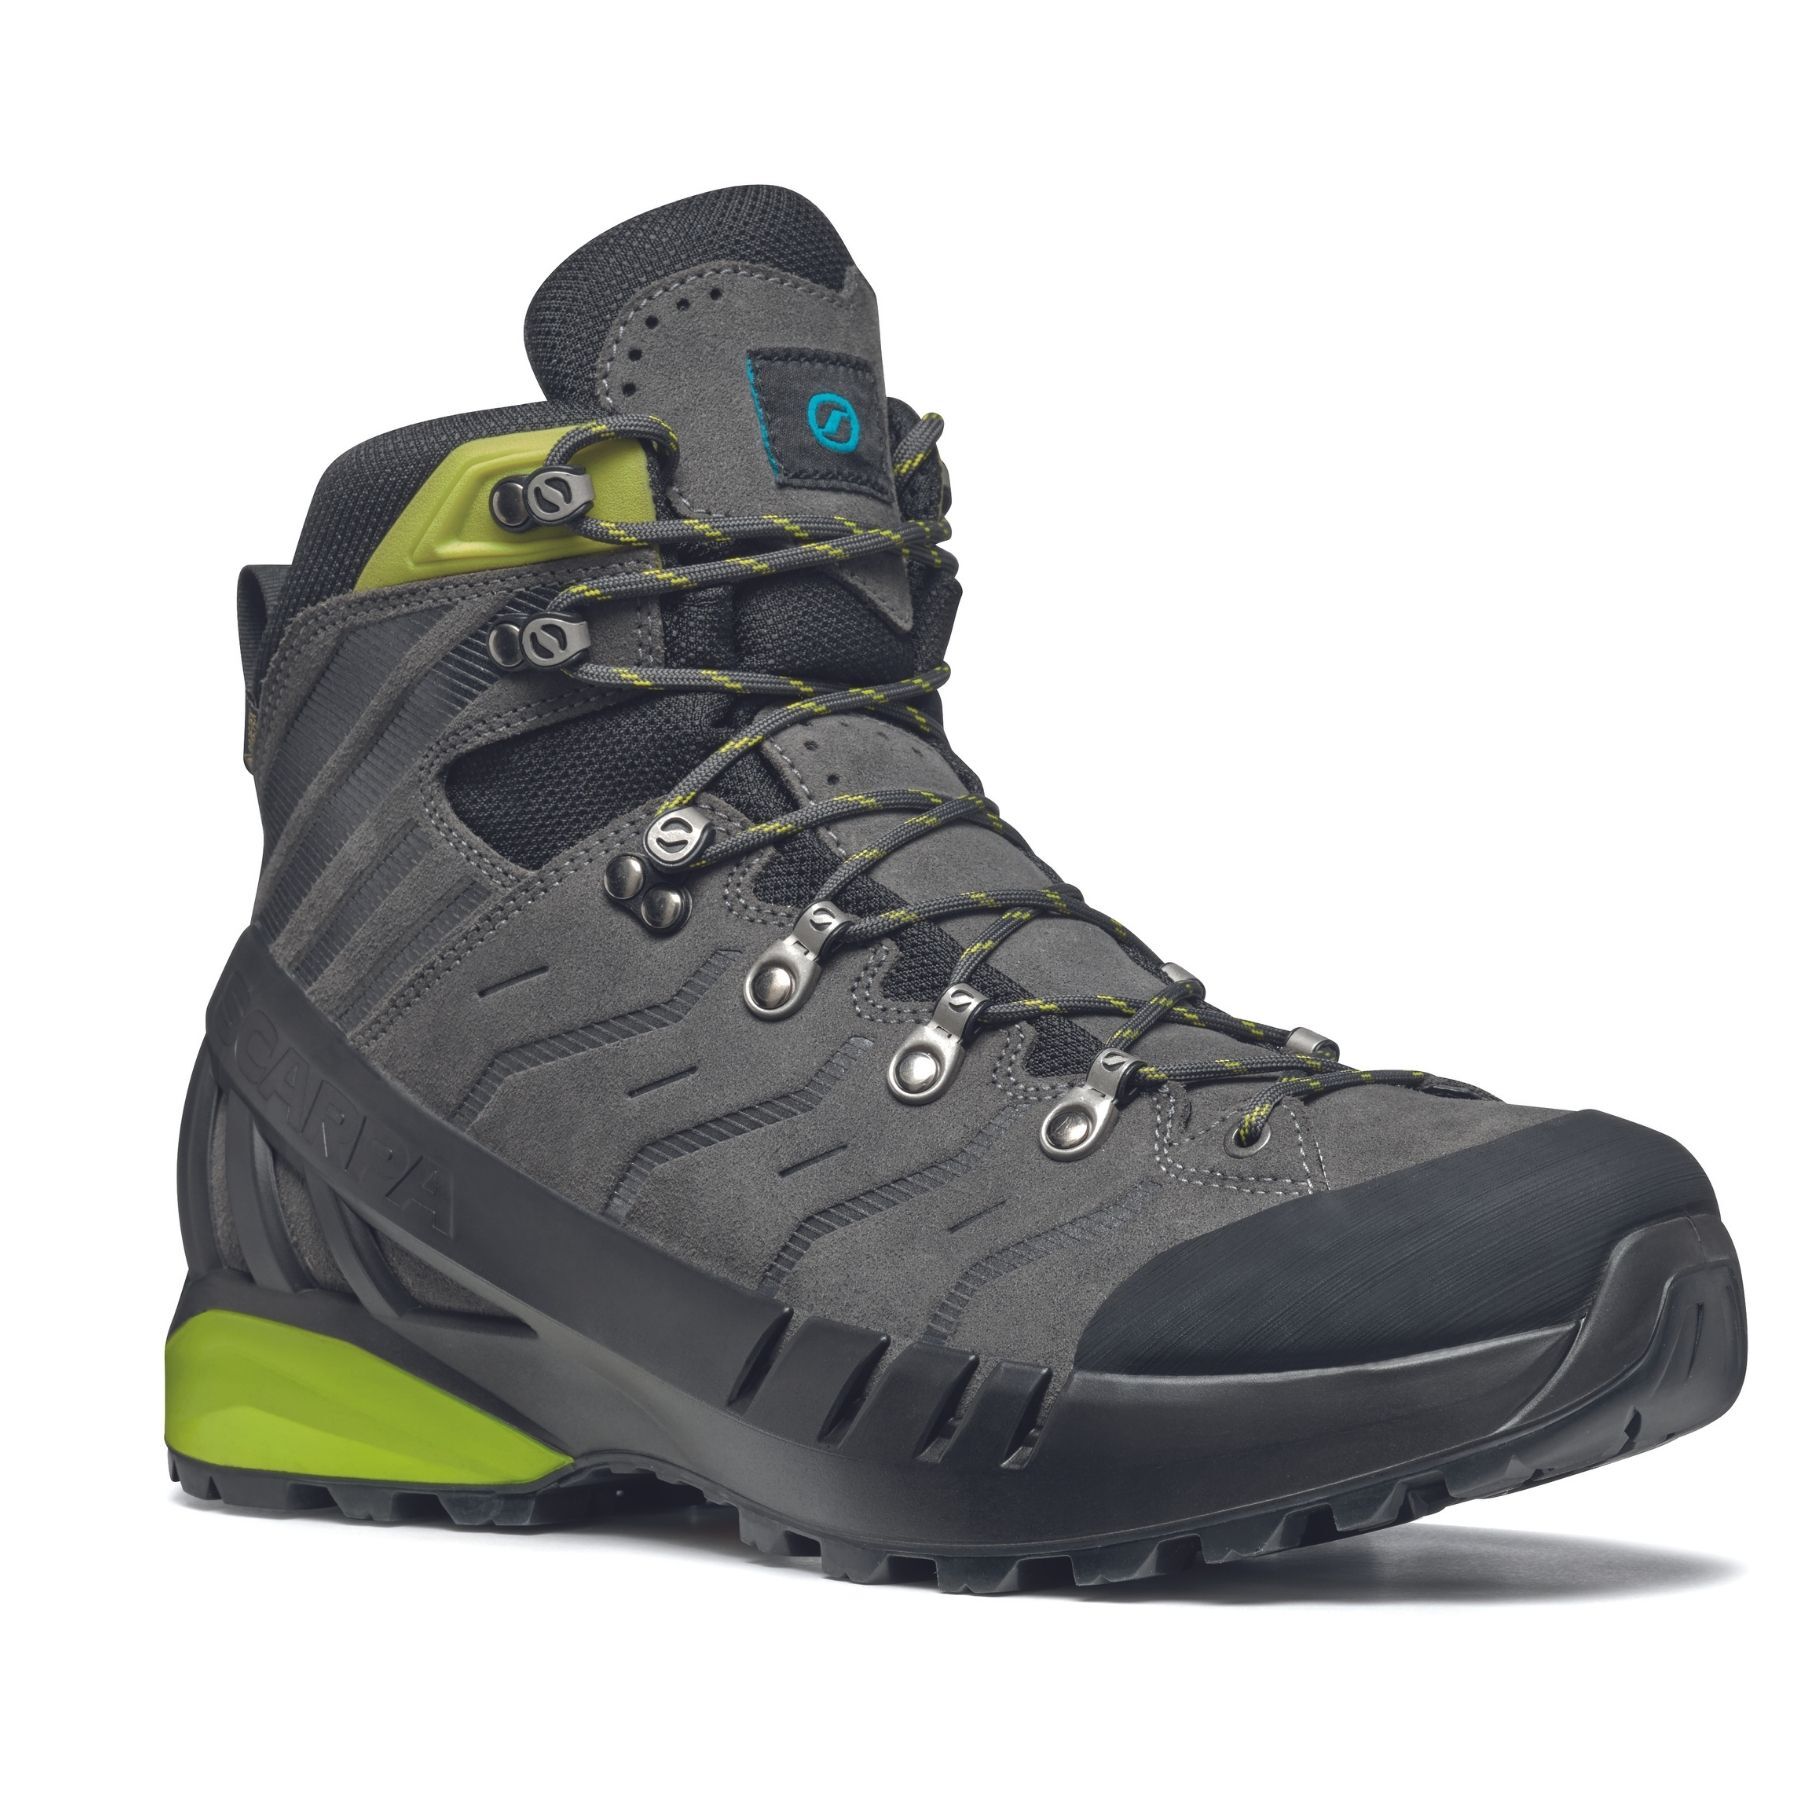 Scarpa Cyclone S GTX - Hiking boots - Men's